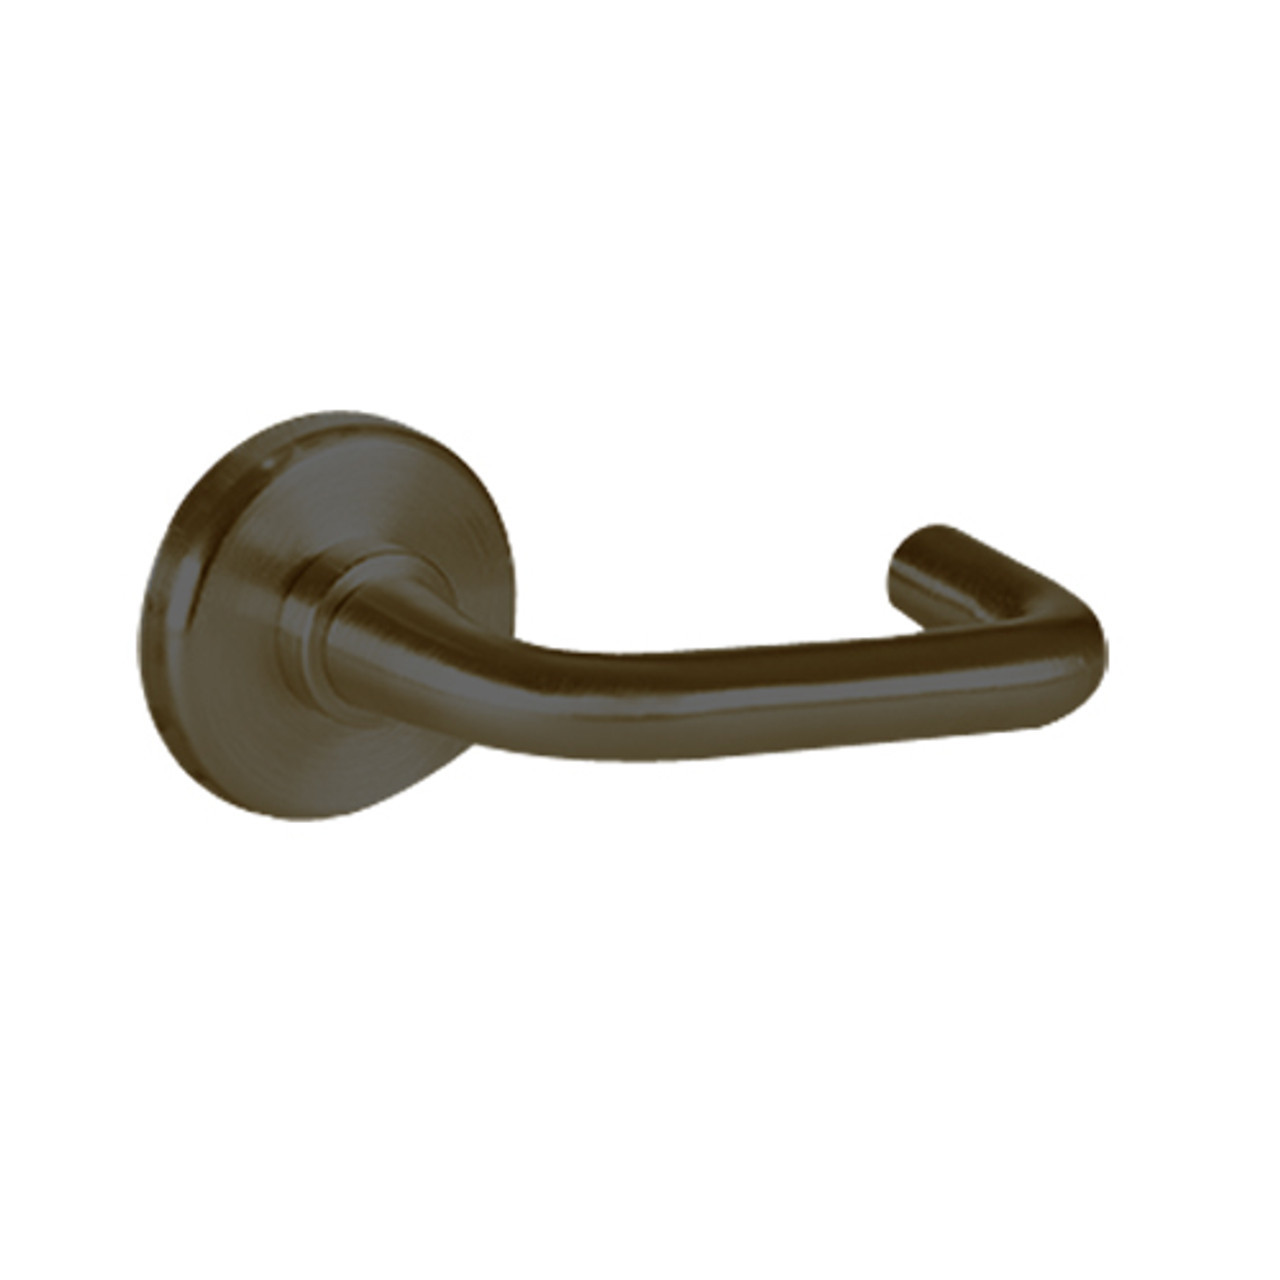 45HW7TDEL3H613RQE12V Best 40HW series Single Key Deadbolt Fail Safe Electromechanical Mortise Lever Lock with Solid Tube w/ Return Style in Oil Rubbed Bronze